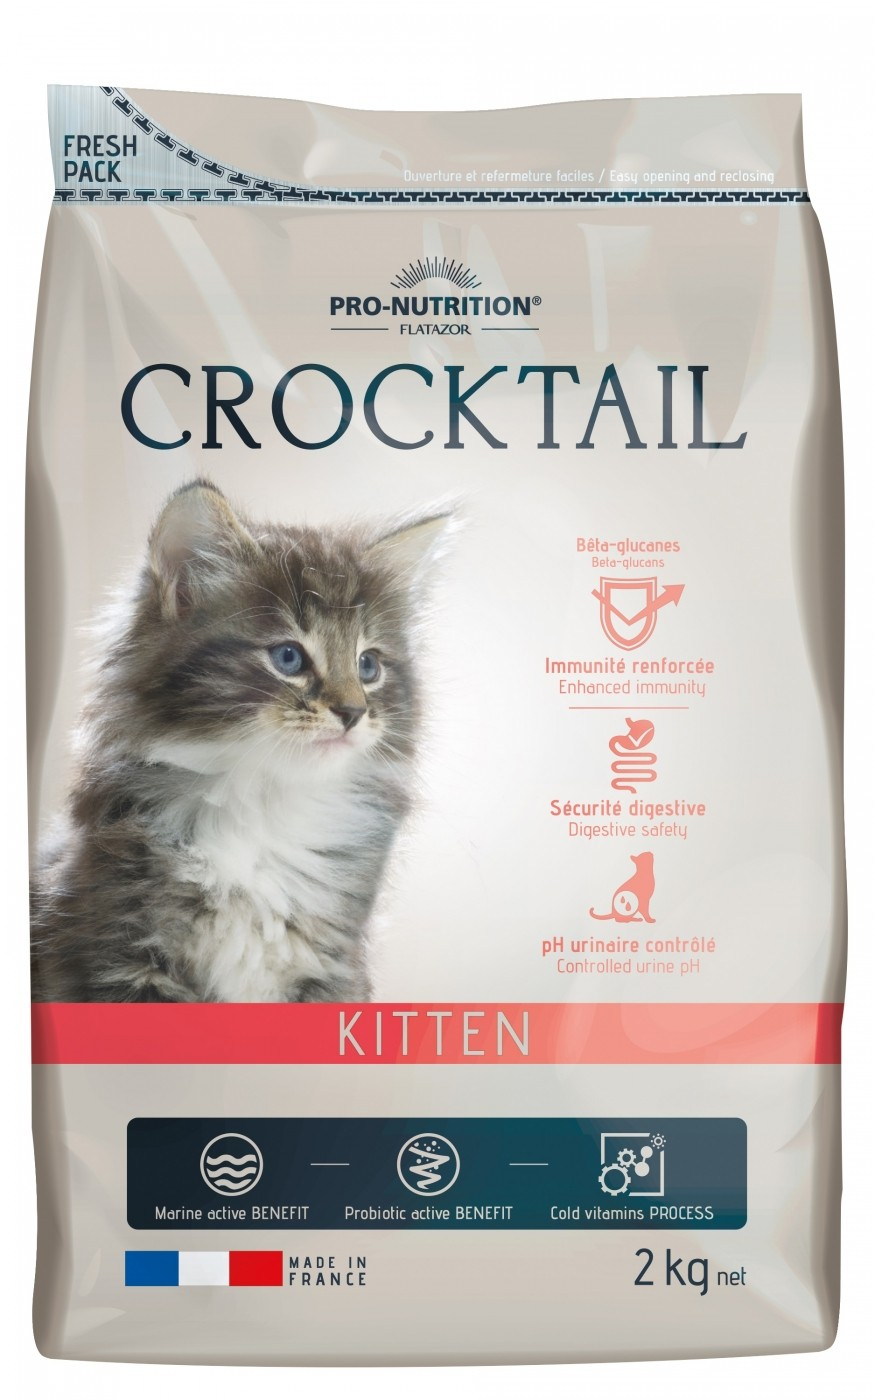 PRO-NUTRITION Flatazor CROCKTAIL Kitten